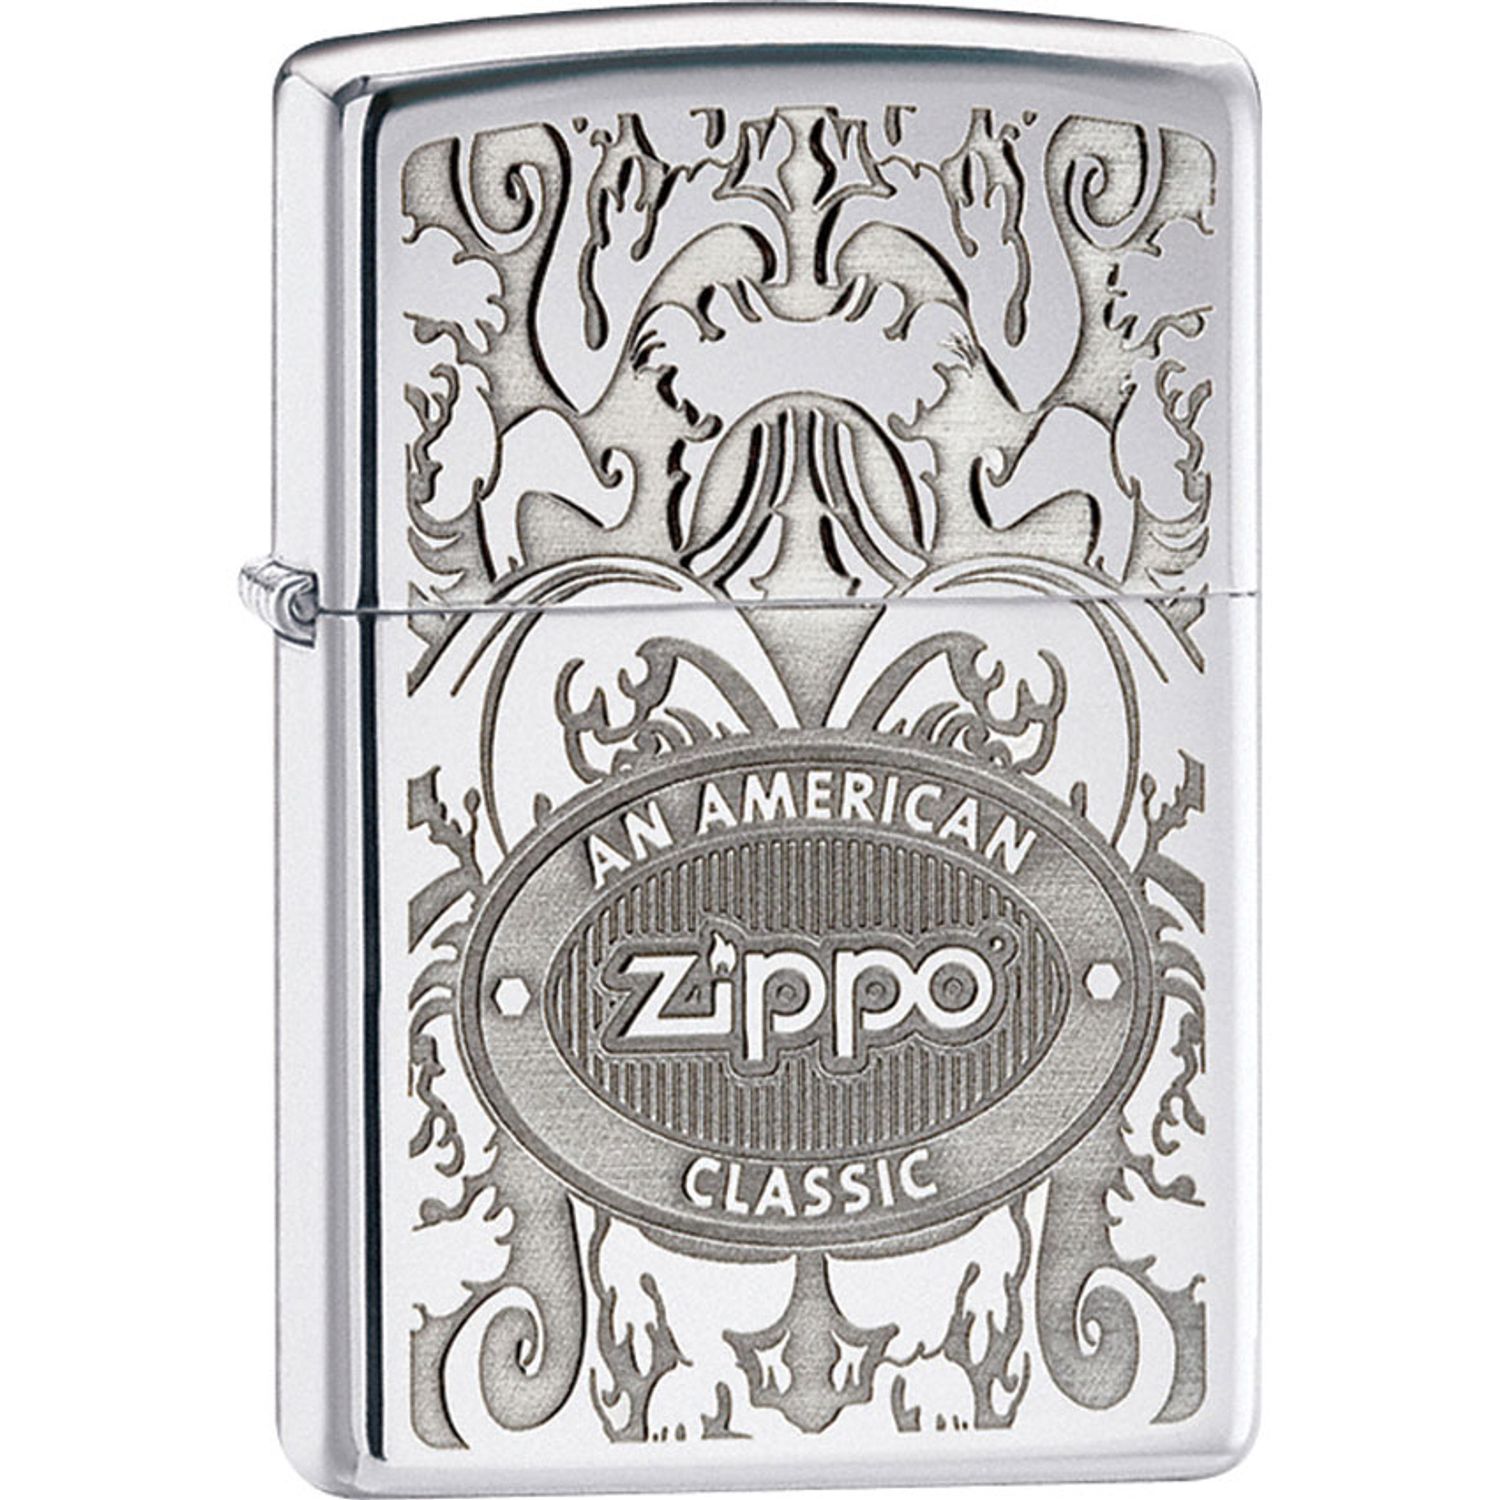 Zippo Lighter American Classic, Zippo Crown Stamp High Polish Chrome